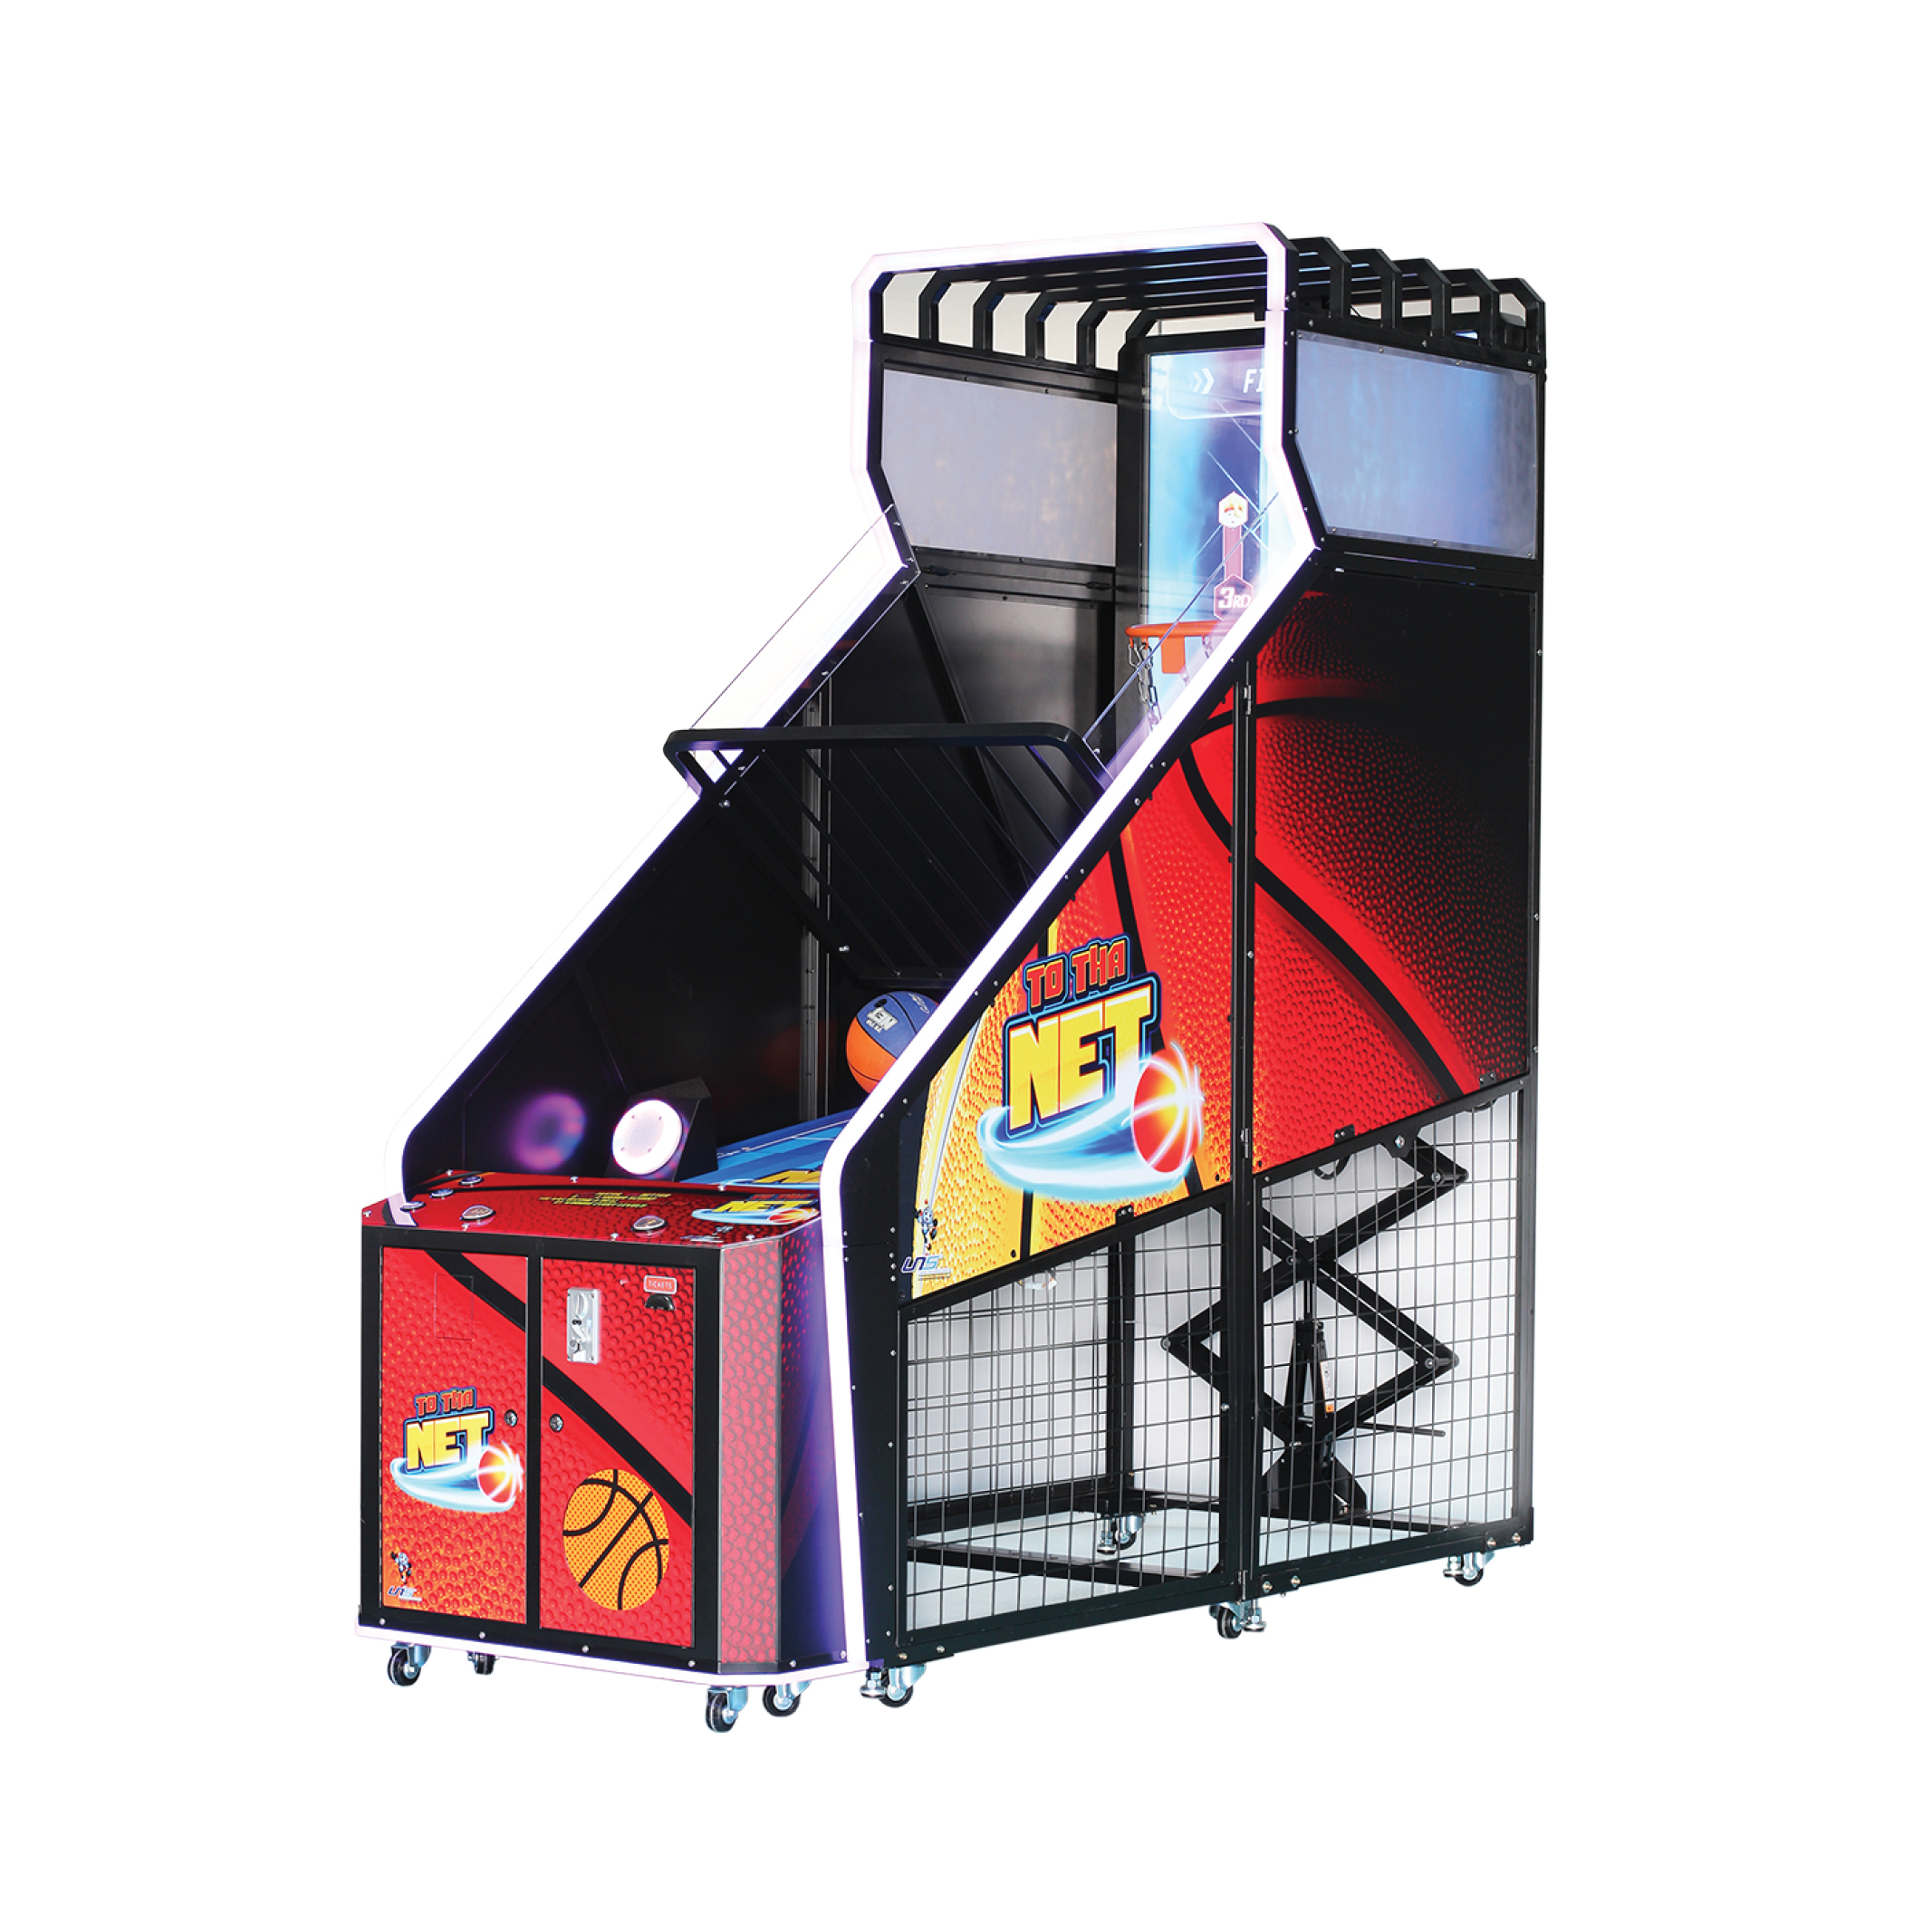 product item - basketball machine01